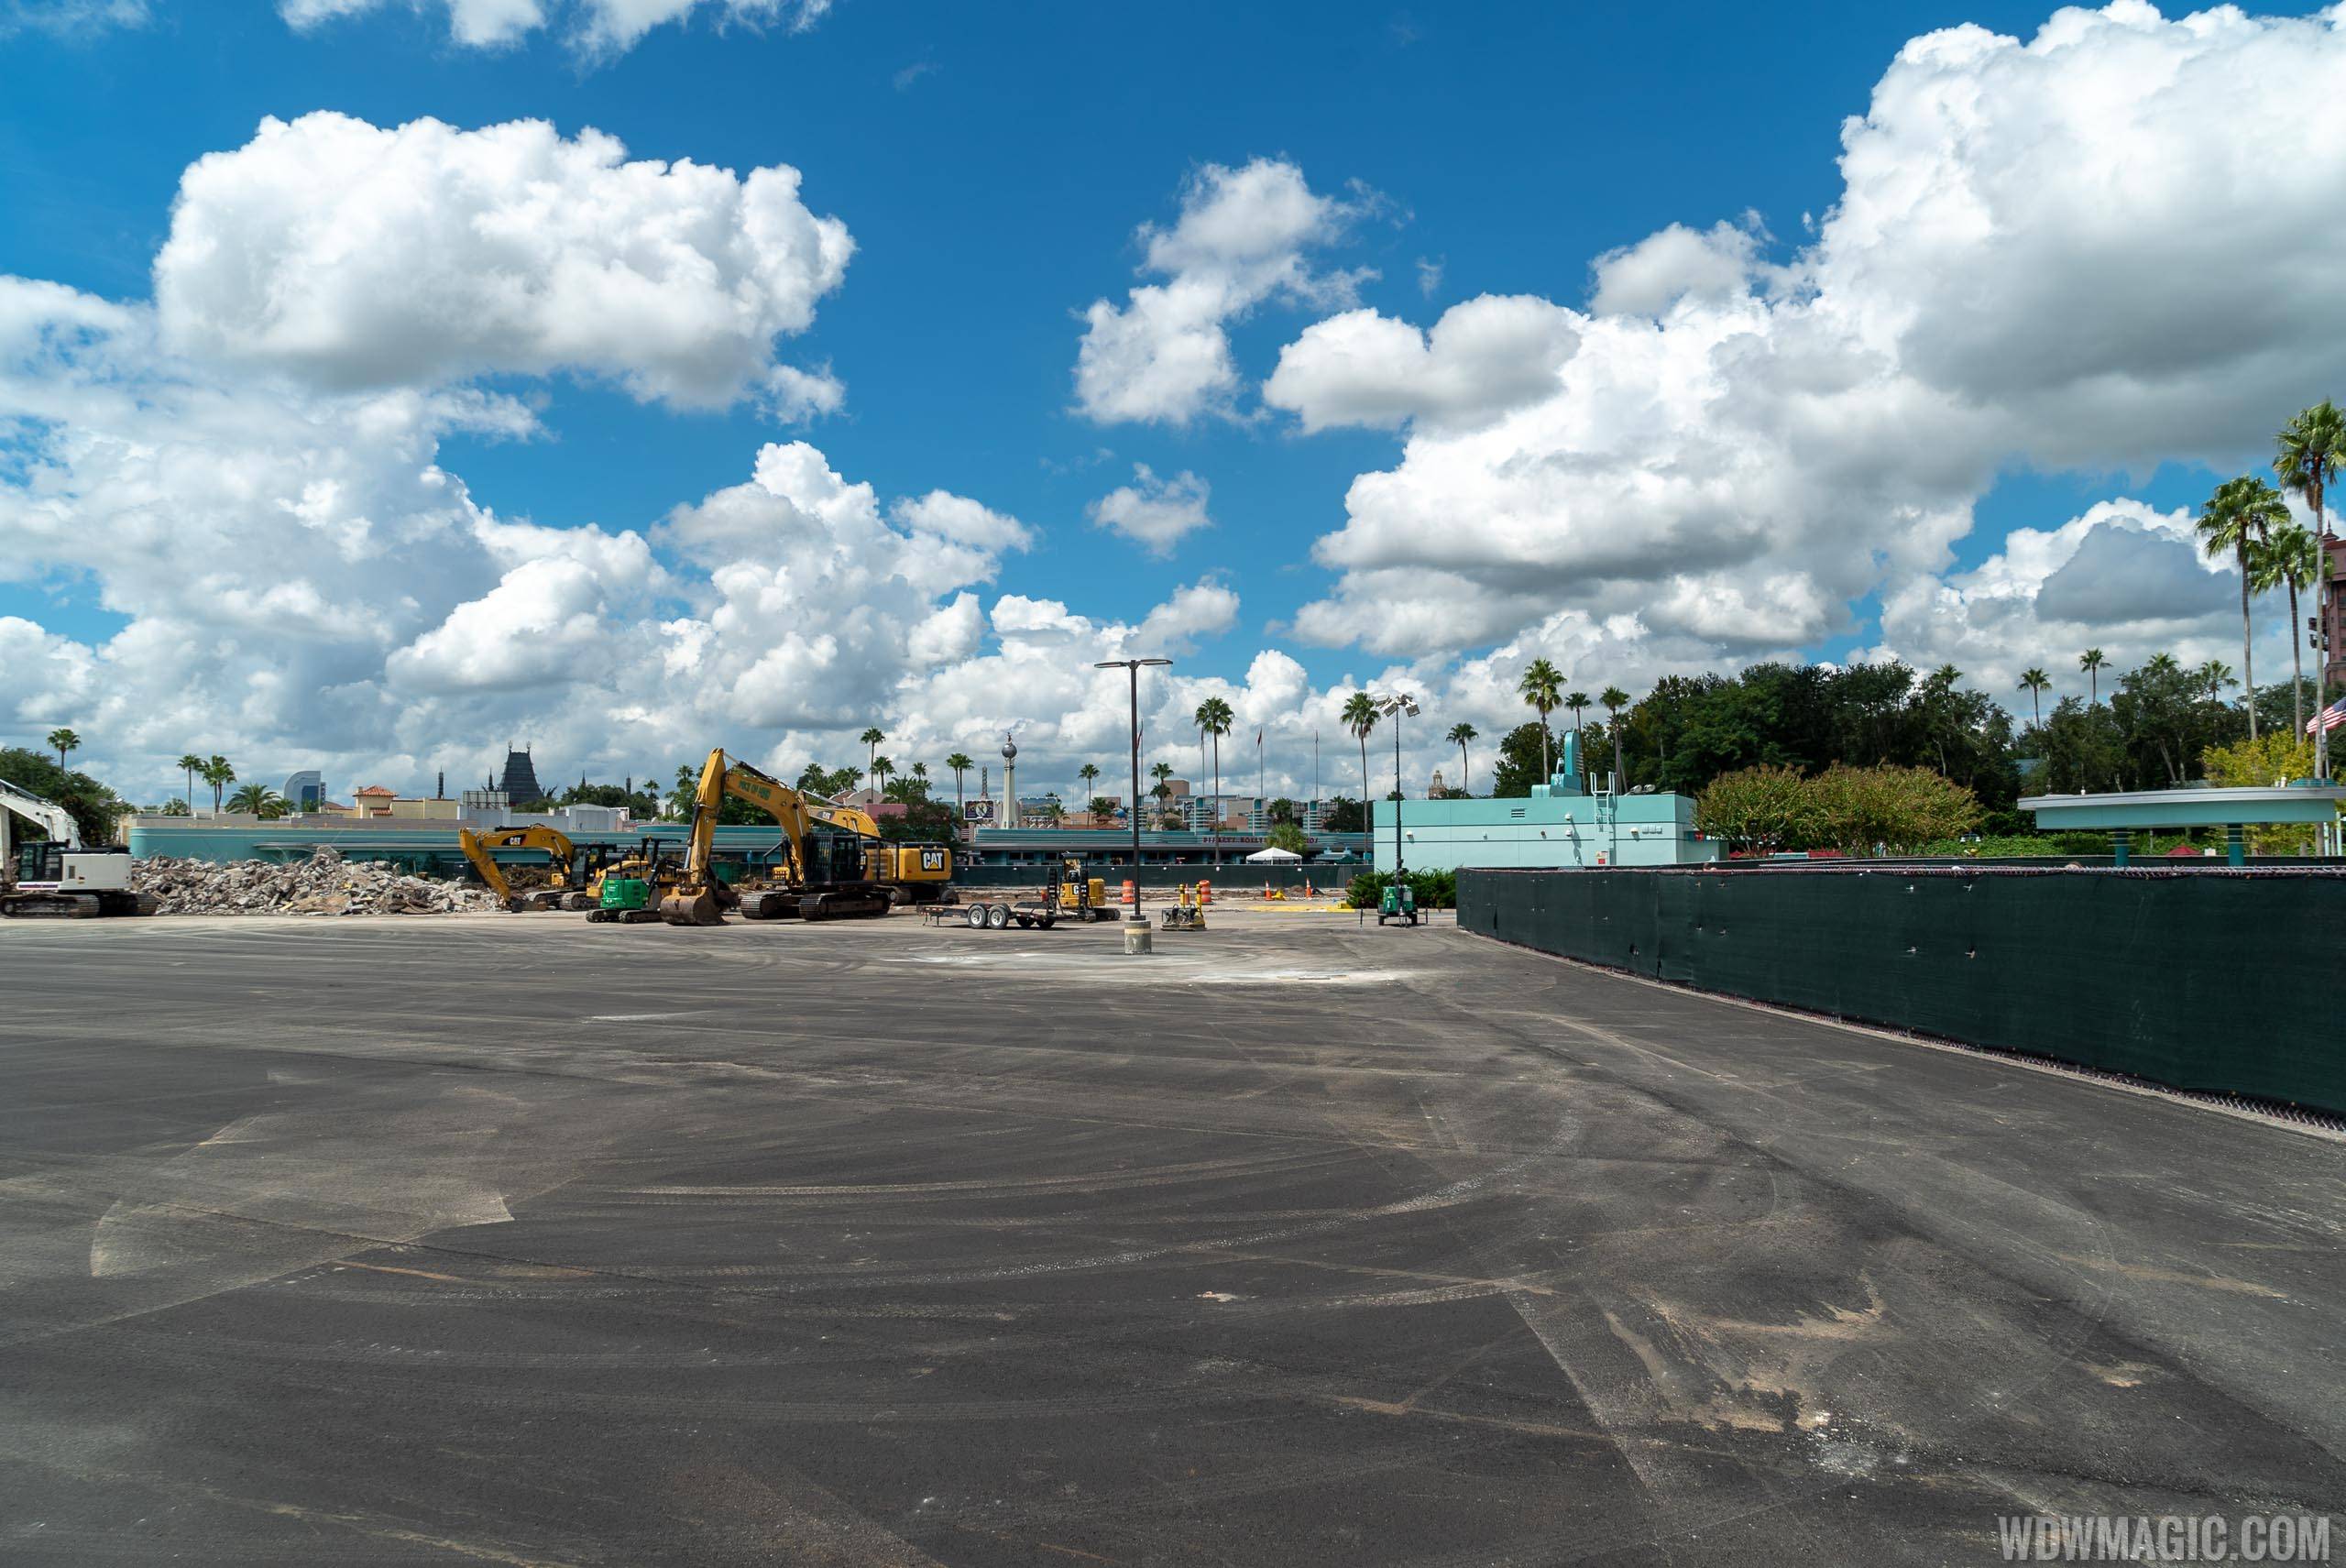 Disney's Hollywood Studios former bus stop demolition and main entrance work